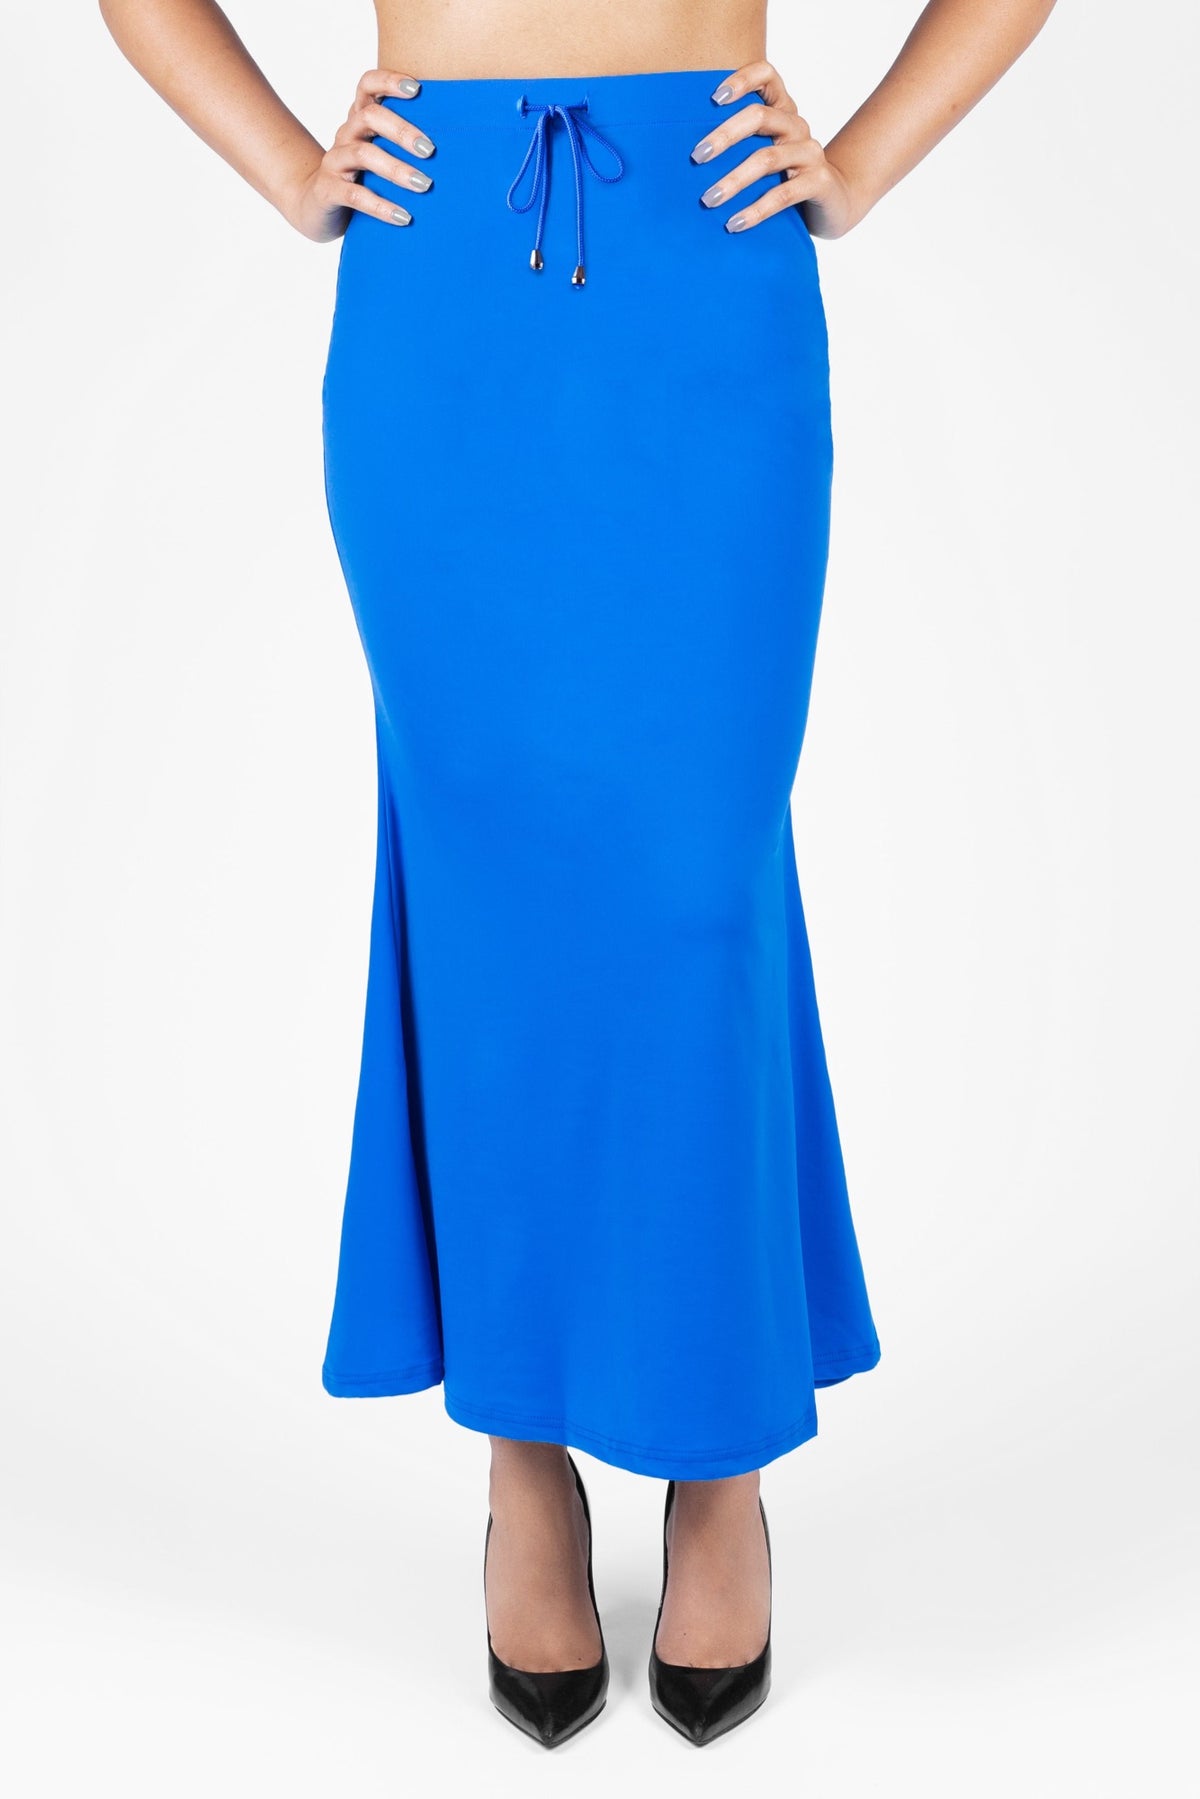 Royal blue plain saree shaper - G3-WSP00057 